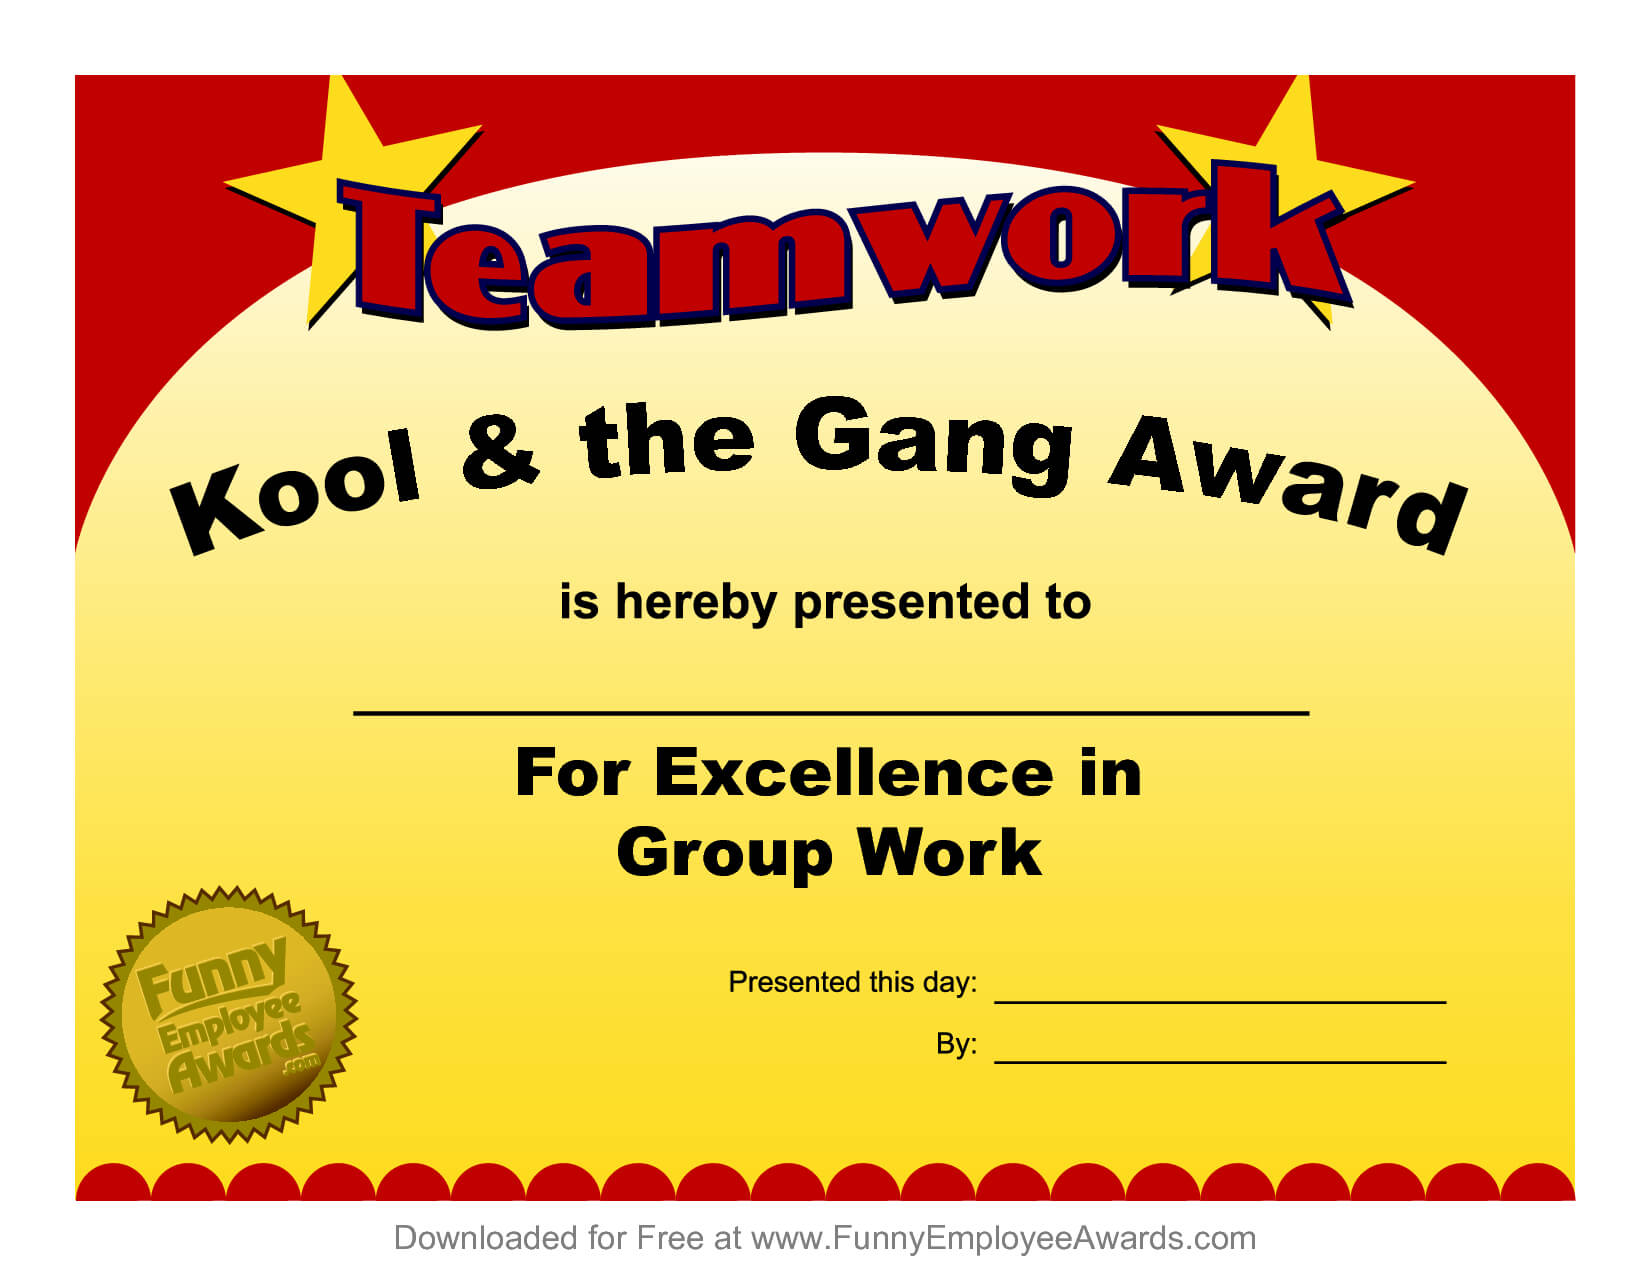 Fun Award Templatefree Employee Award Certificate Templates For Funny Certificates For Employees Templates